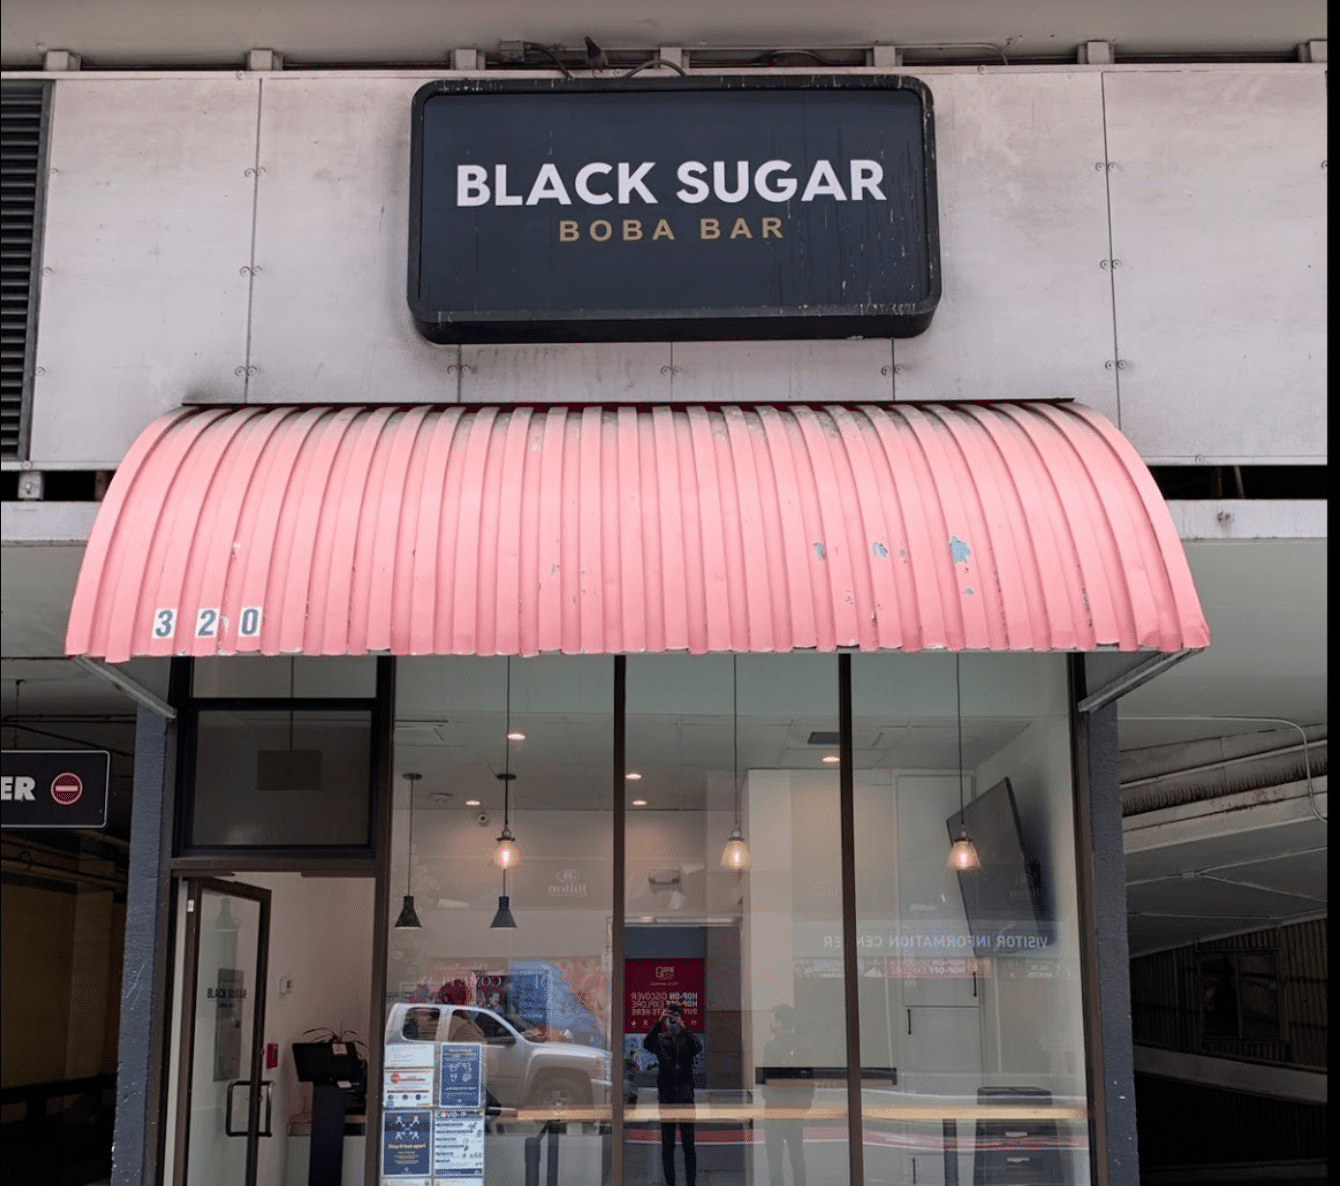 Black Sugar – Boba Bar